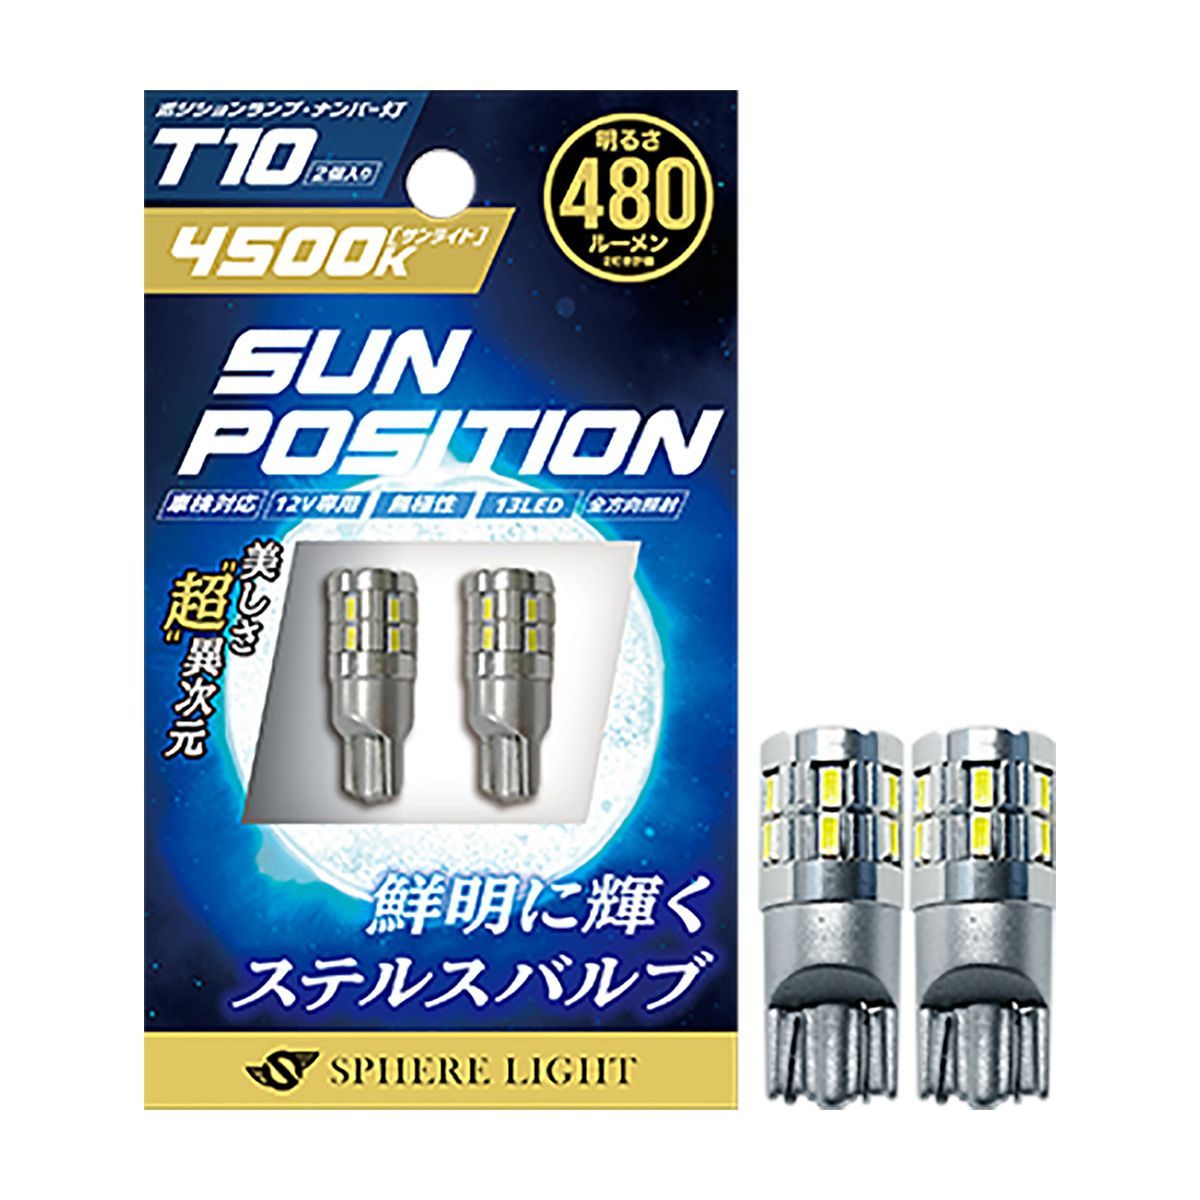 SPHERE LIGHT スフィアライト ポジション ナンバー灯専用LED SUNPOSITION SUNPT1045-2 4500K T10 2本入り